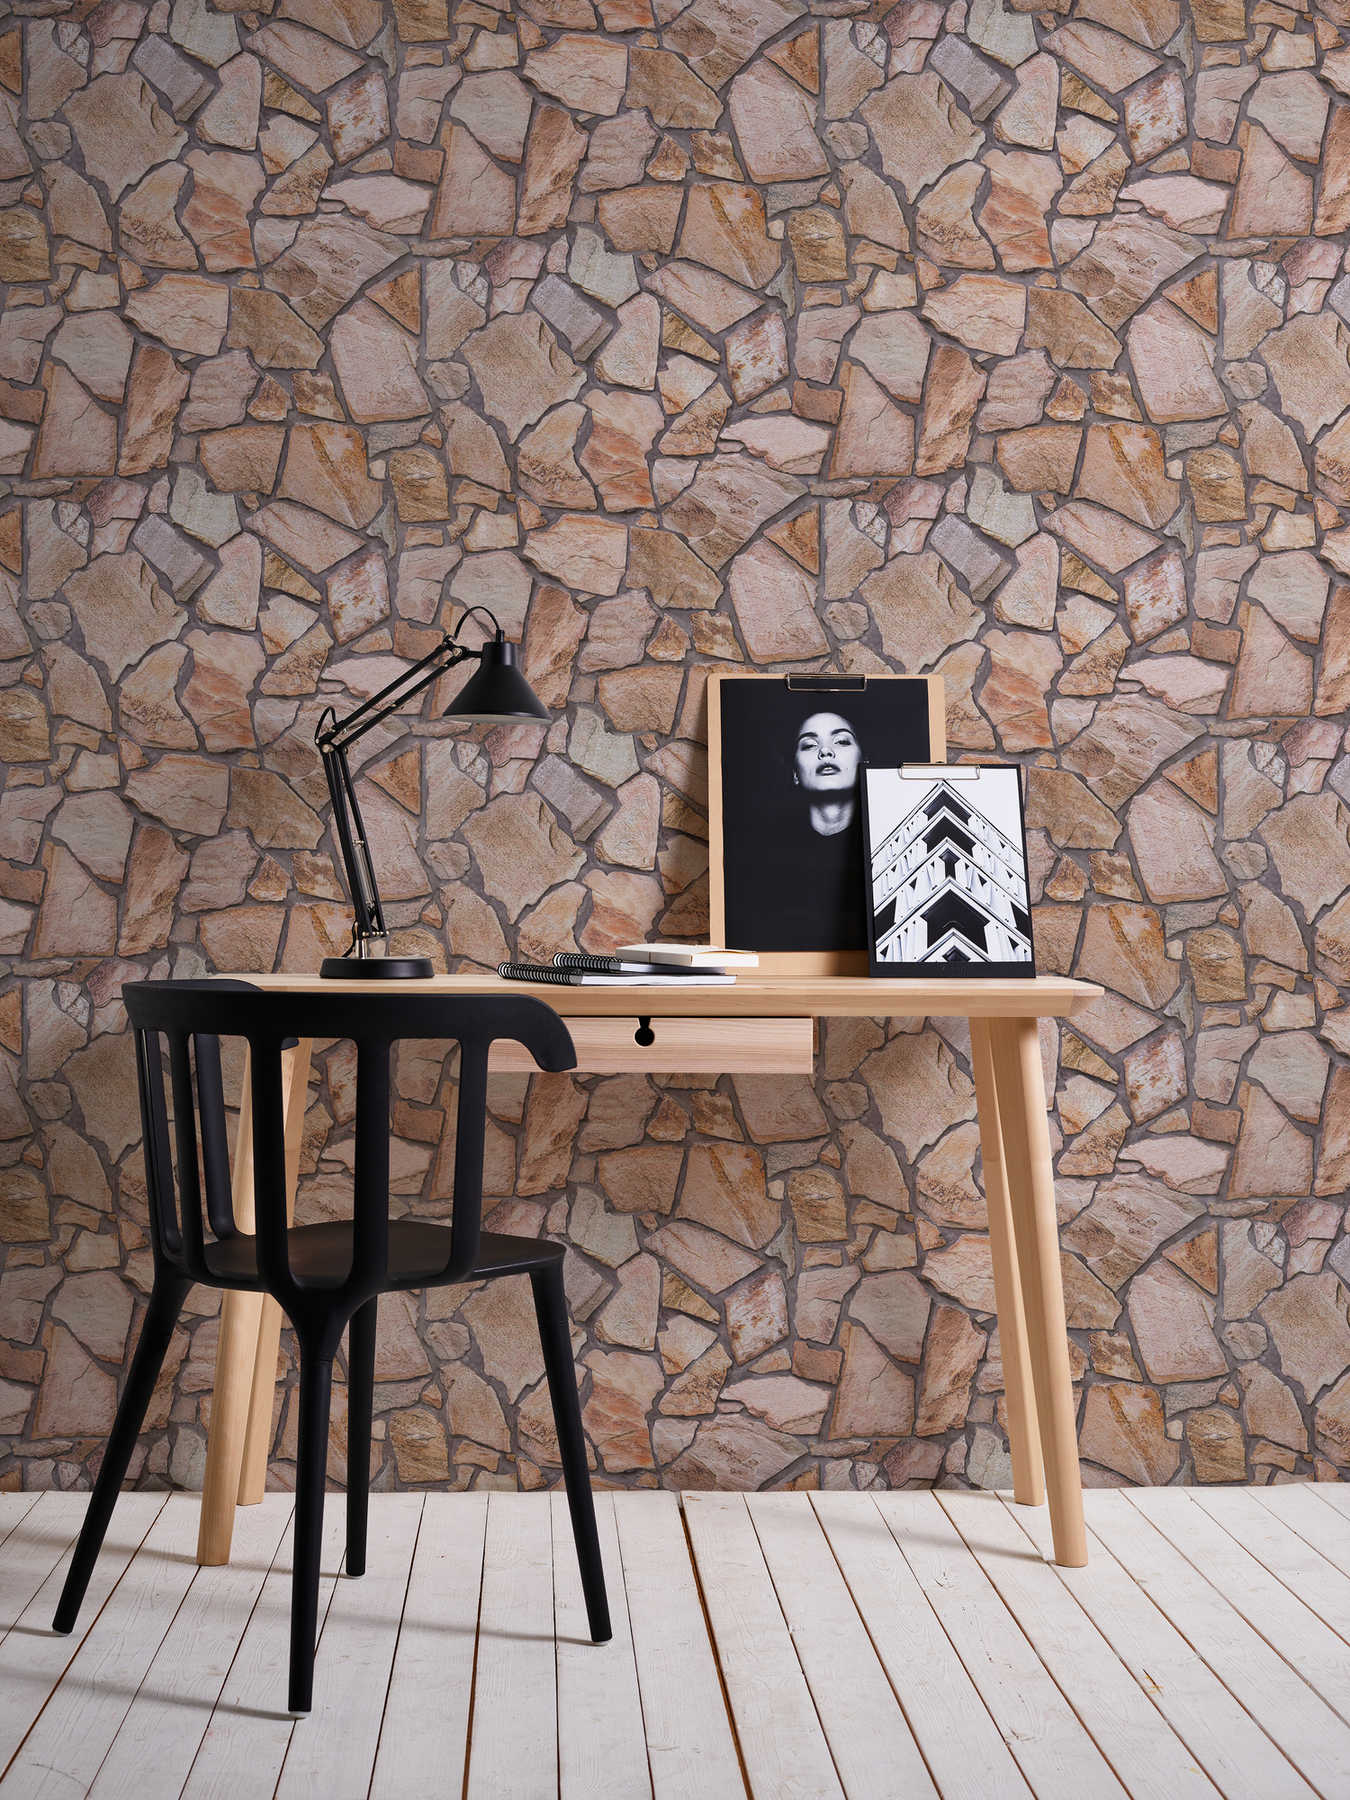             3D wallpaper natural stone detailed & rustic - brown, beige, grey
        